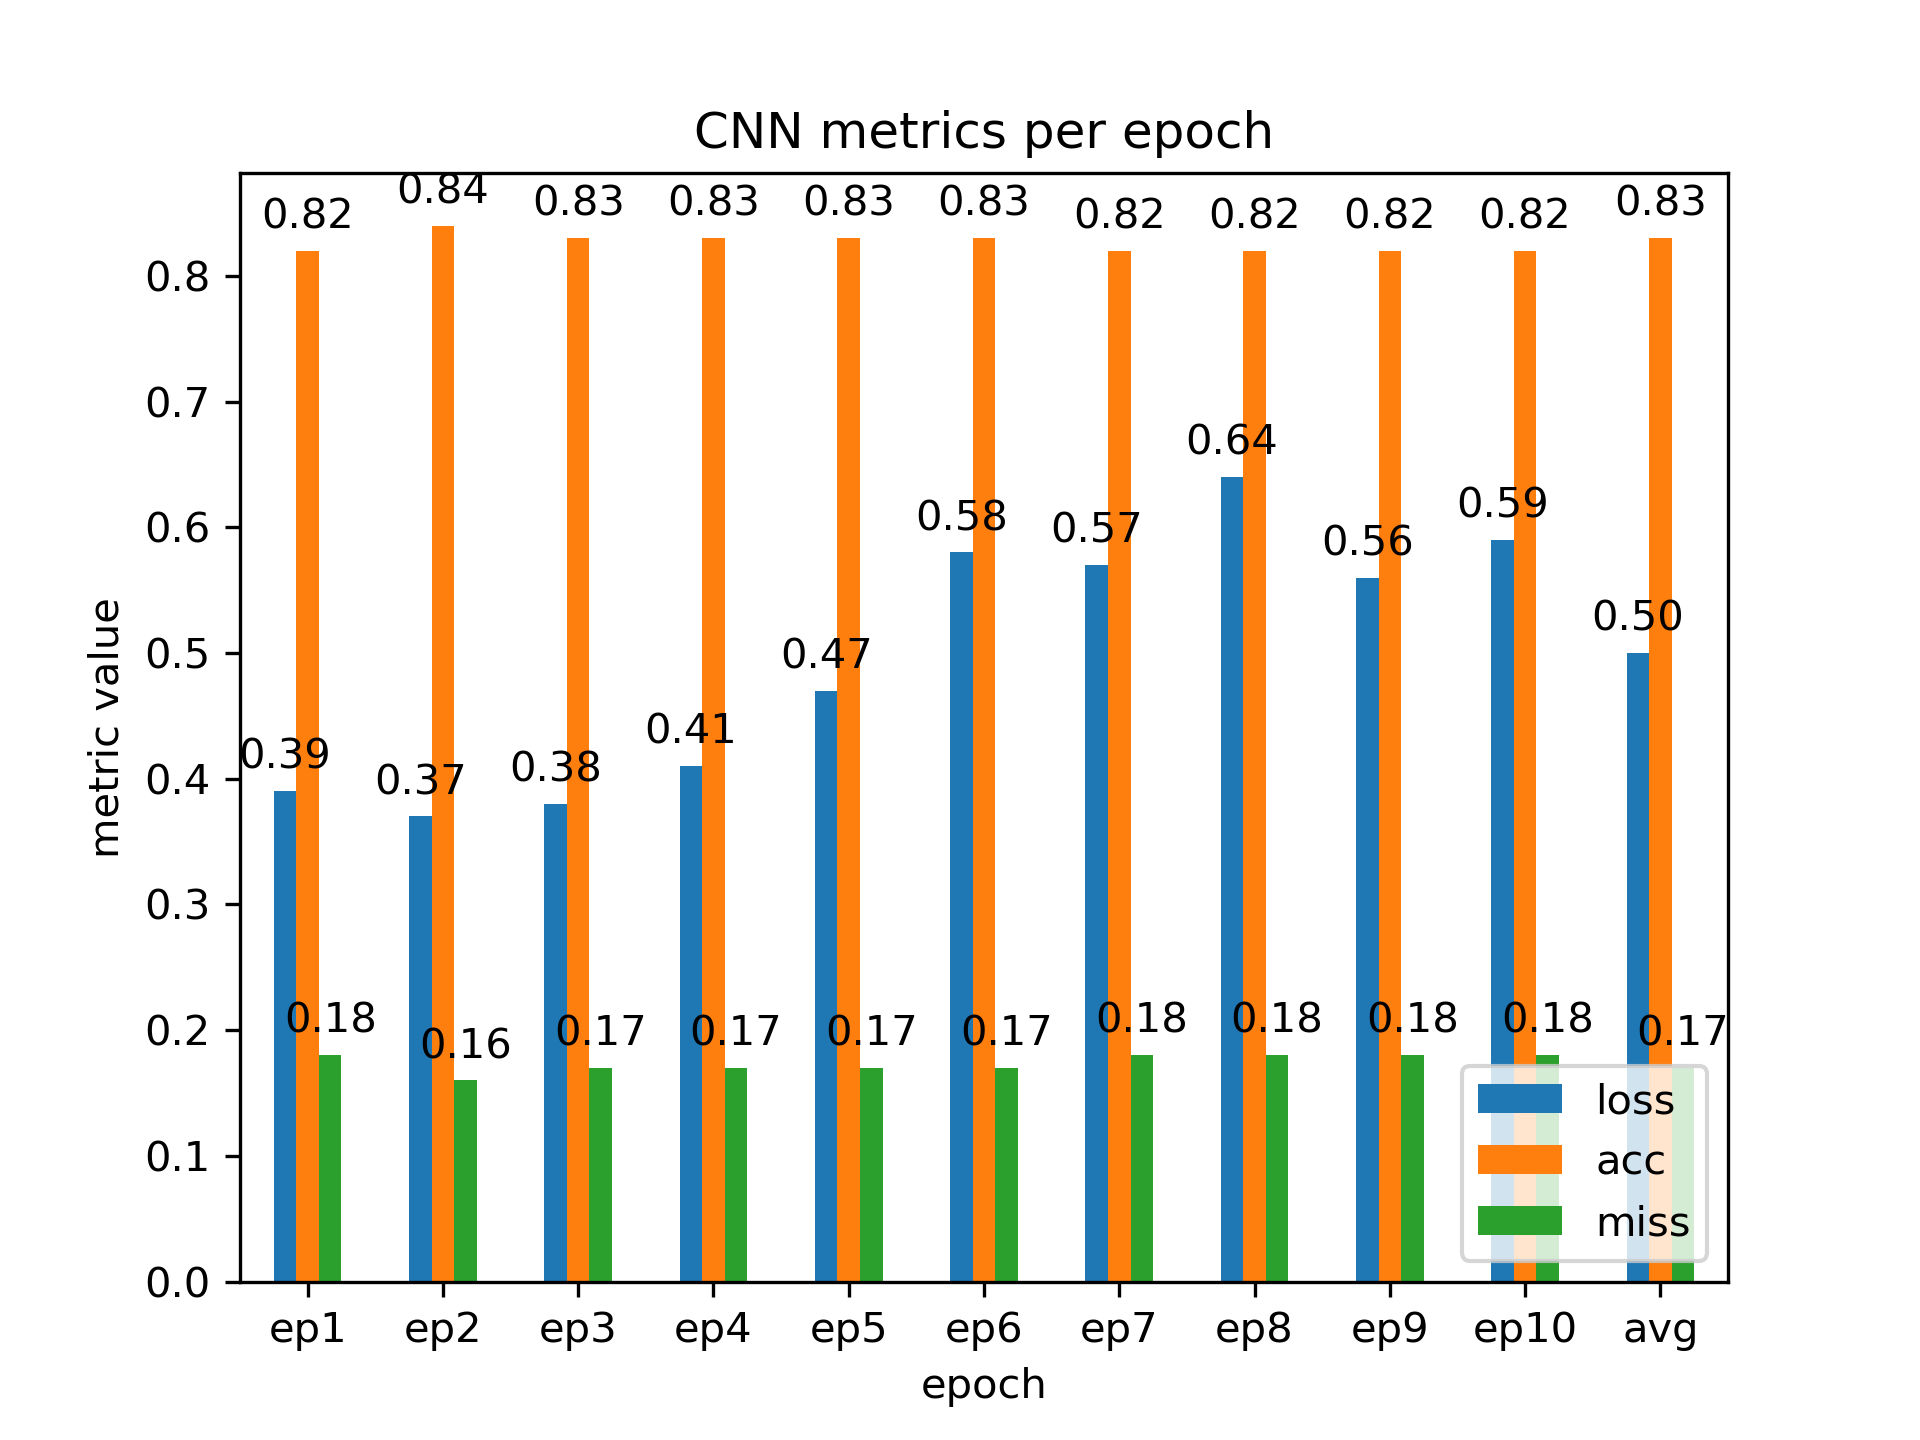 CNN metrics with average